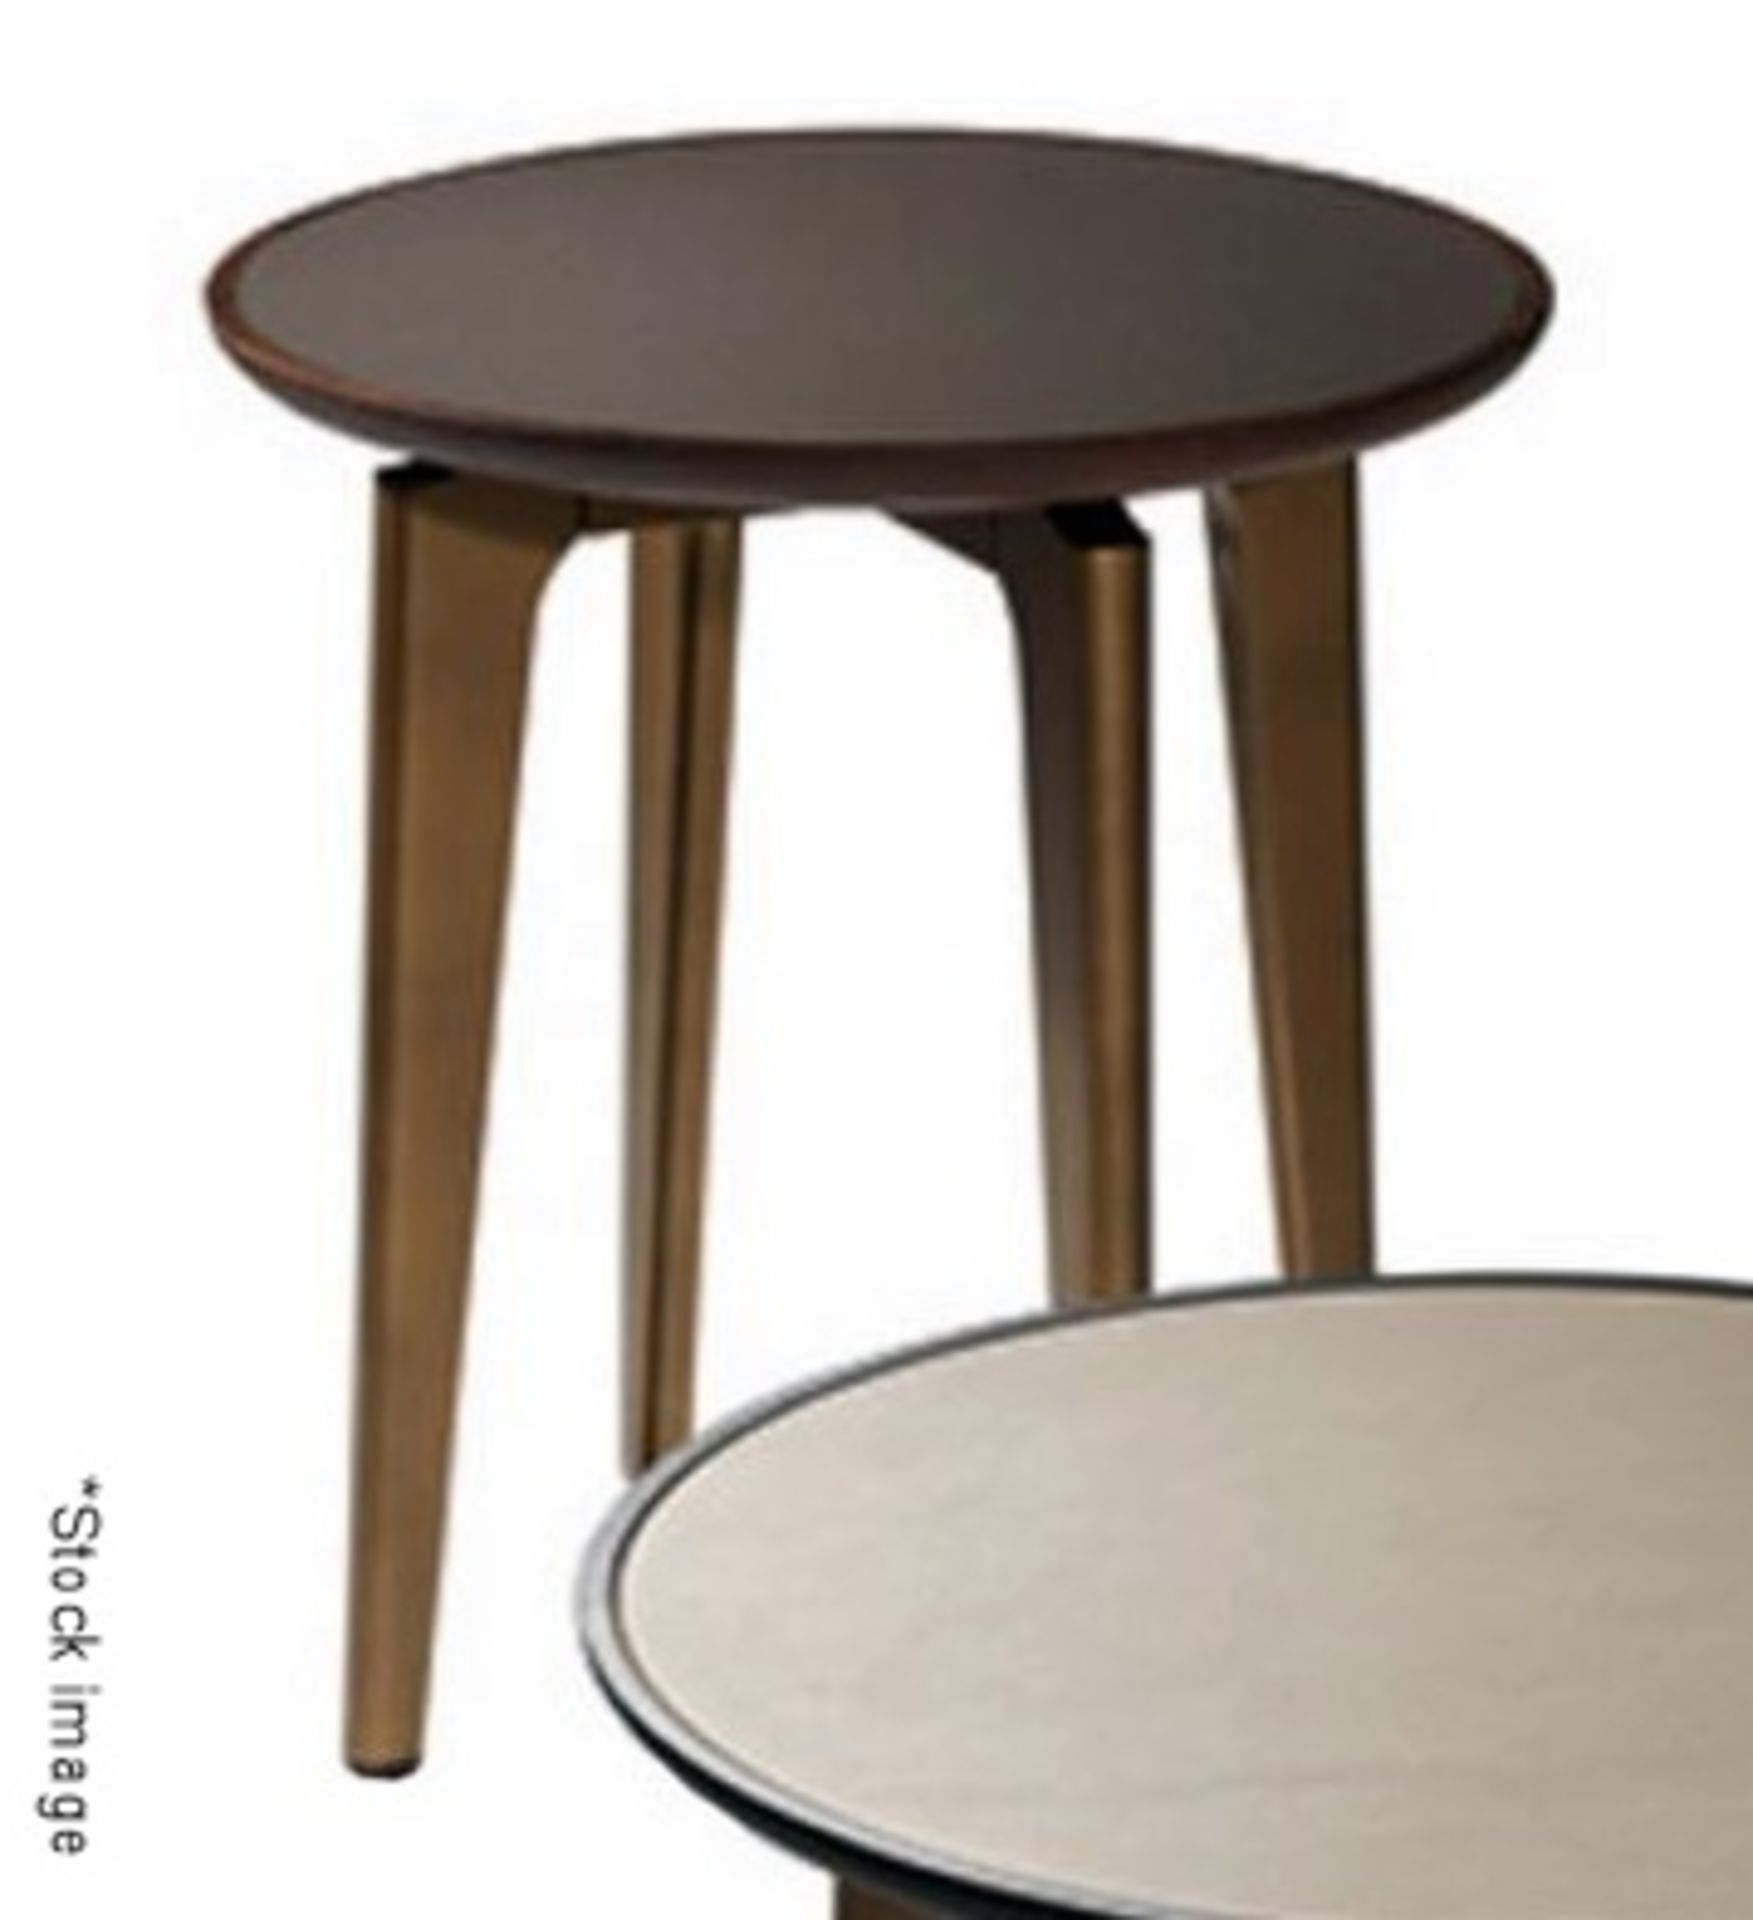 1 x GIORGETTI 'Blend Tavolini' Designer Occasional Table - Ex-Display Showroom Piece